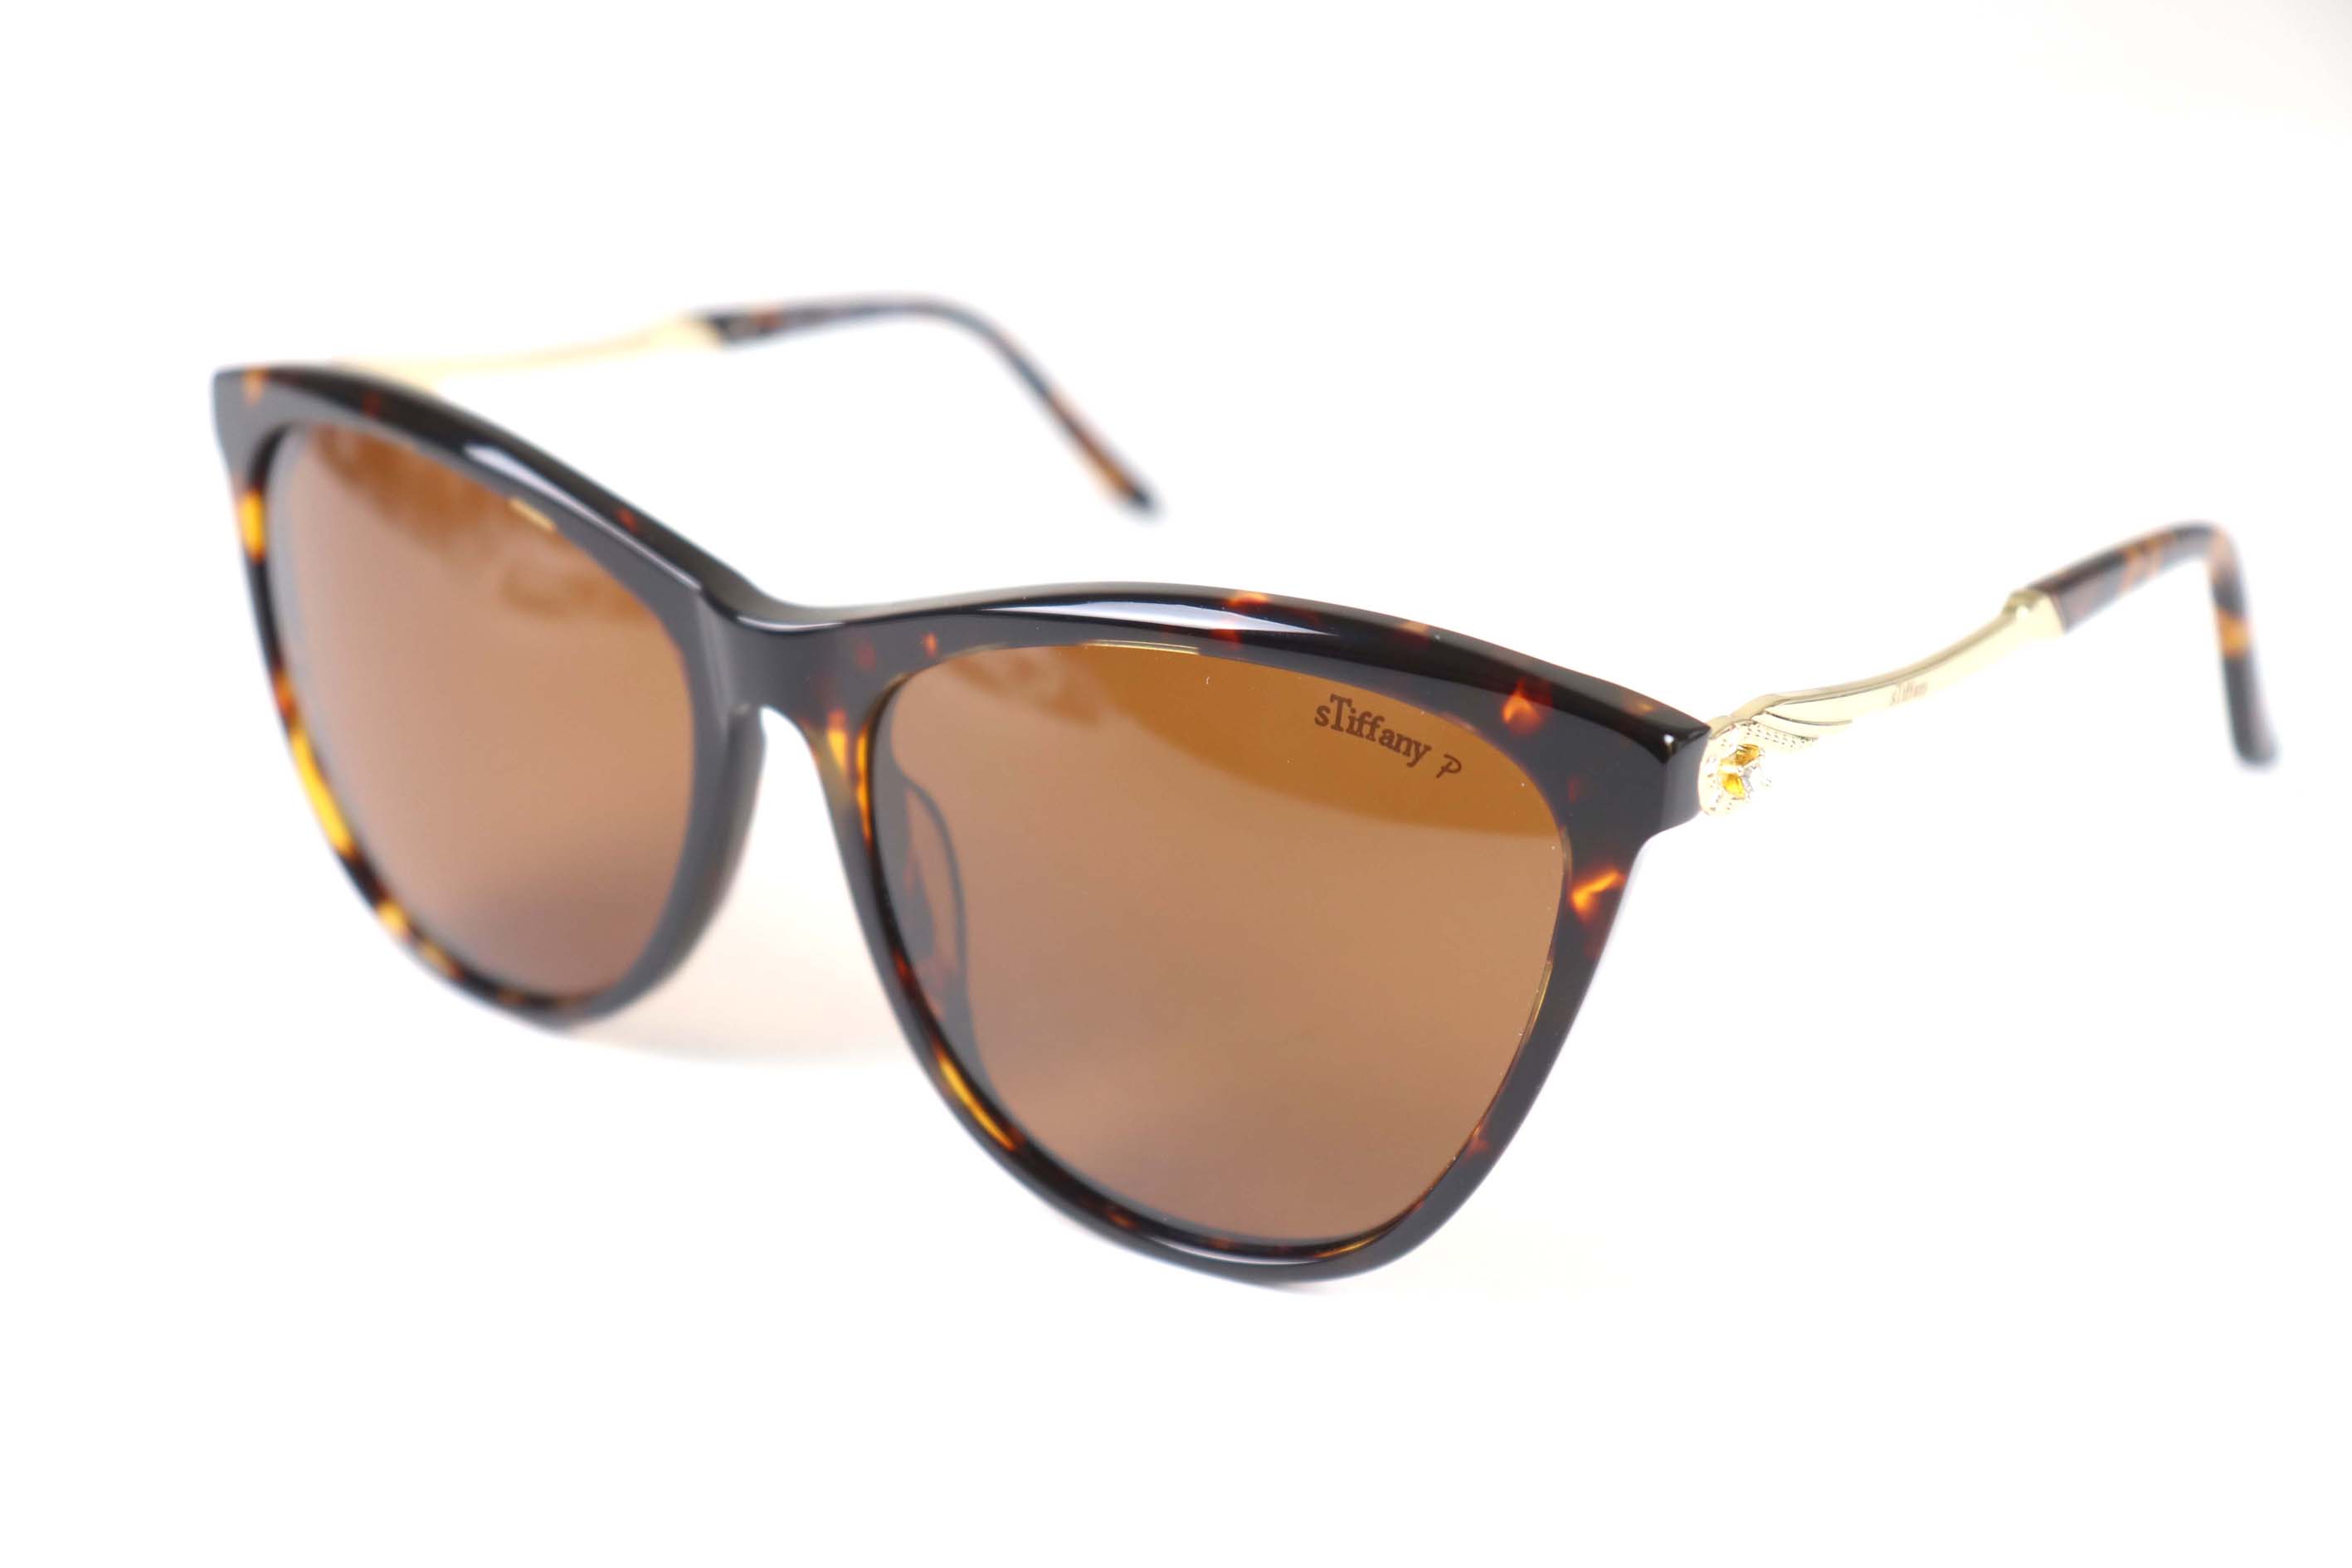 Stiffany Sunglasses-OR-OAK19087-C4-S